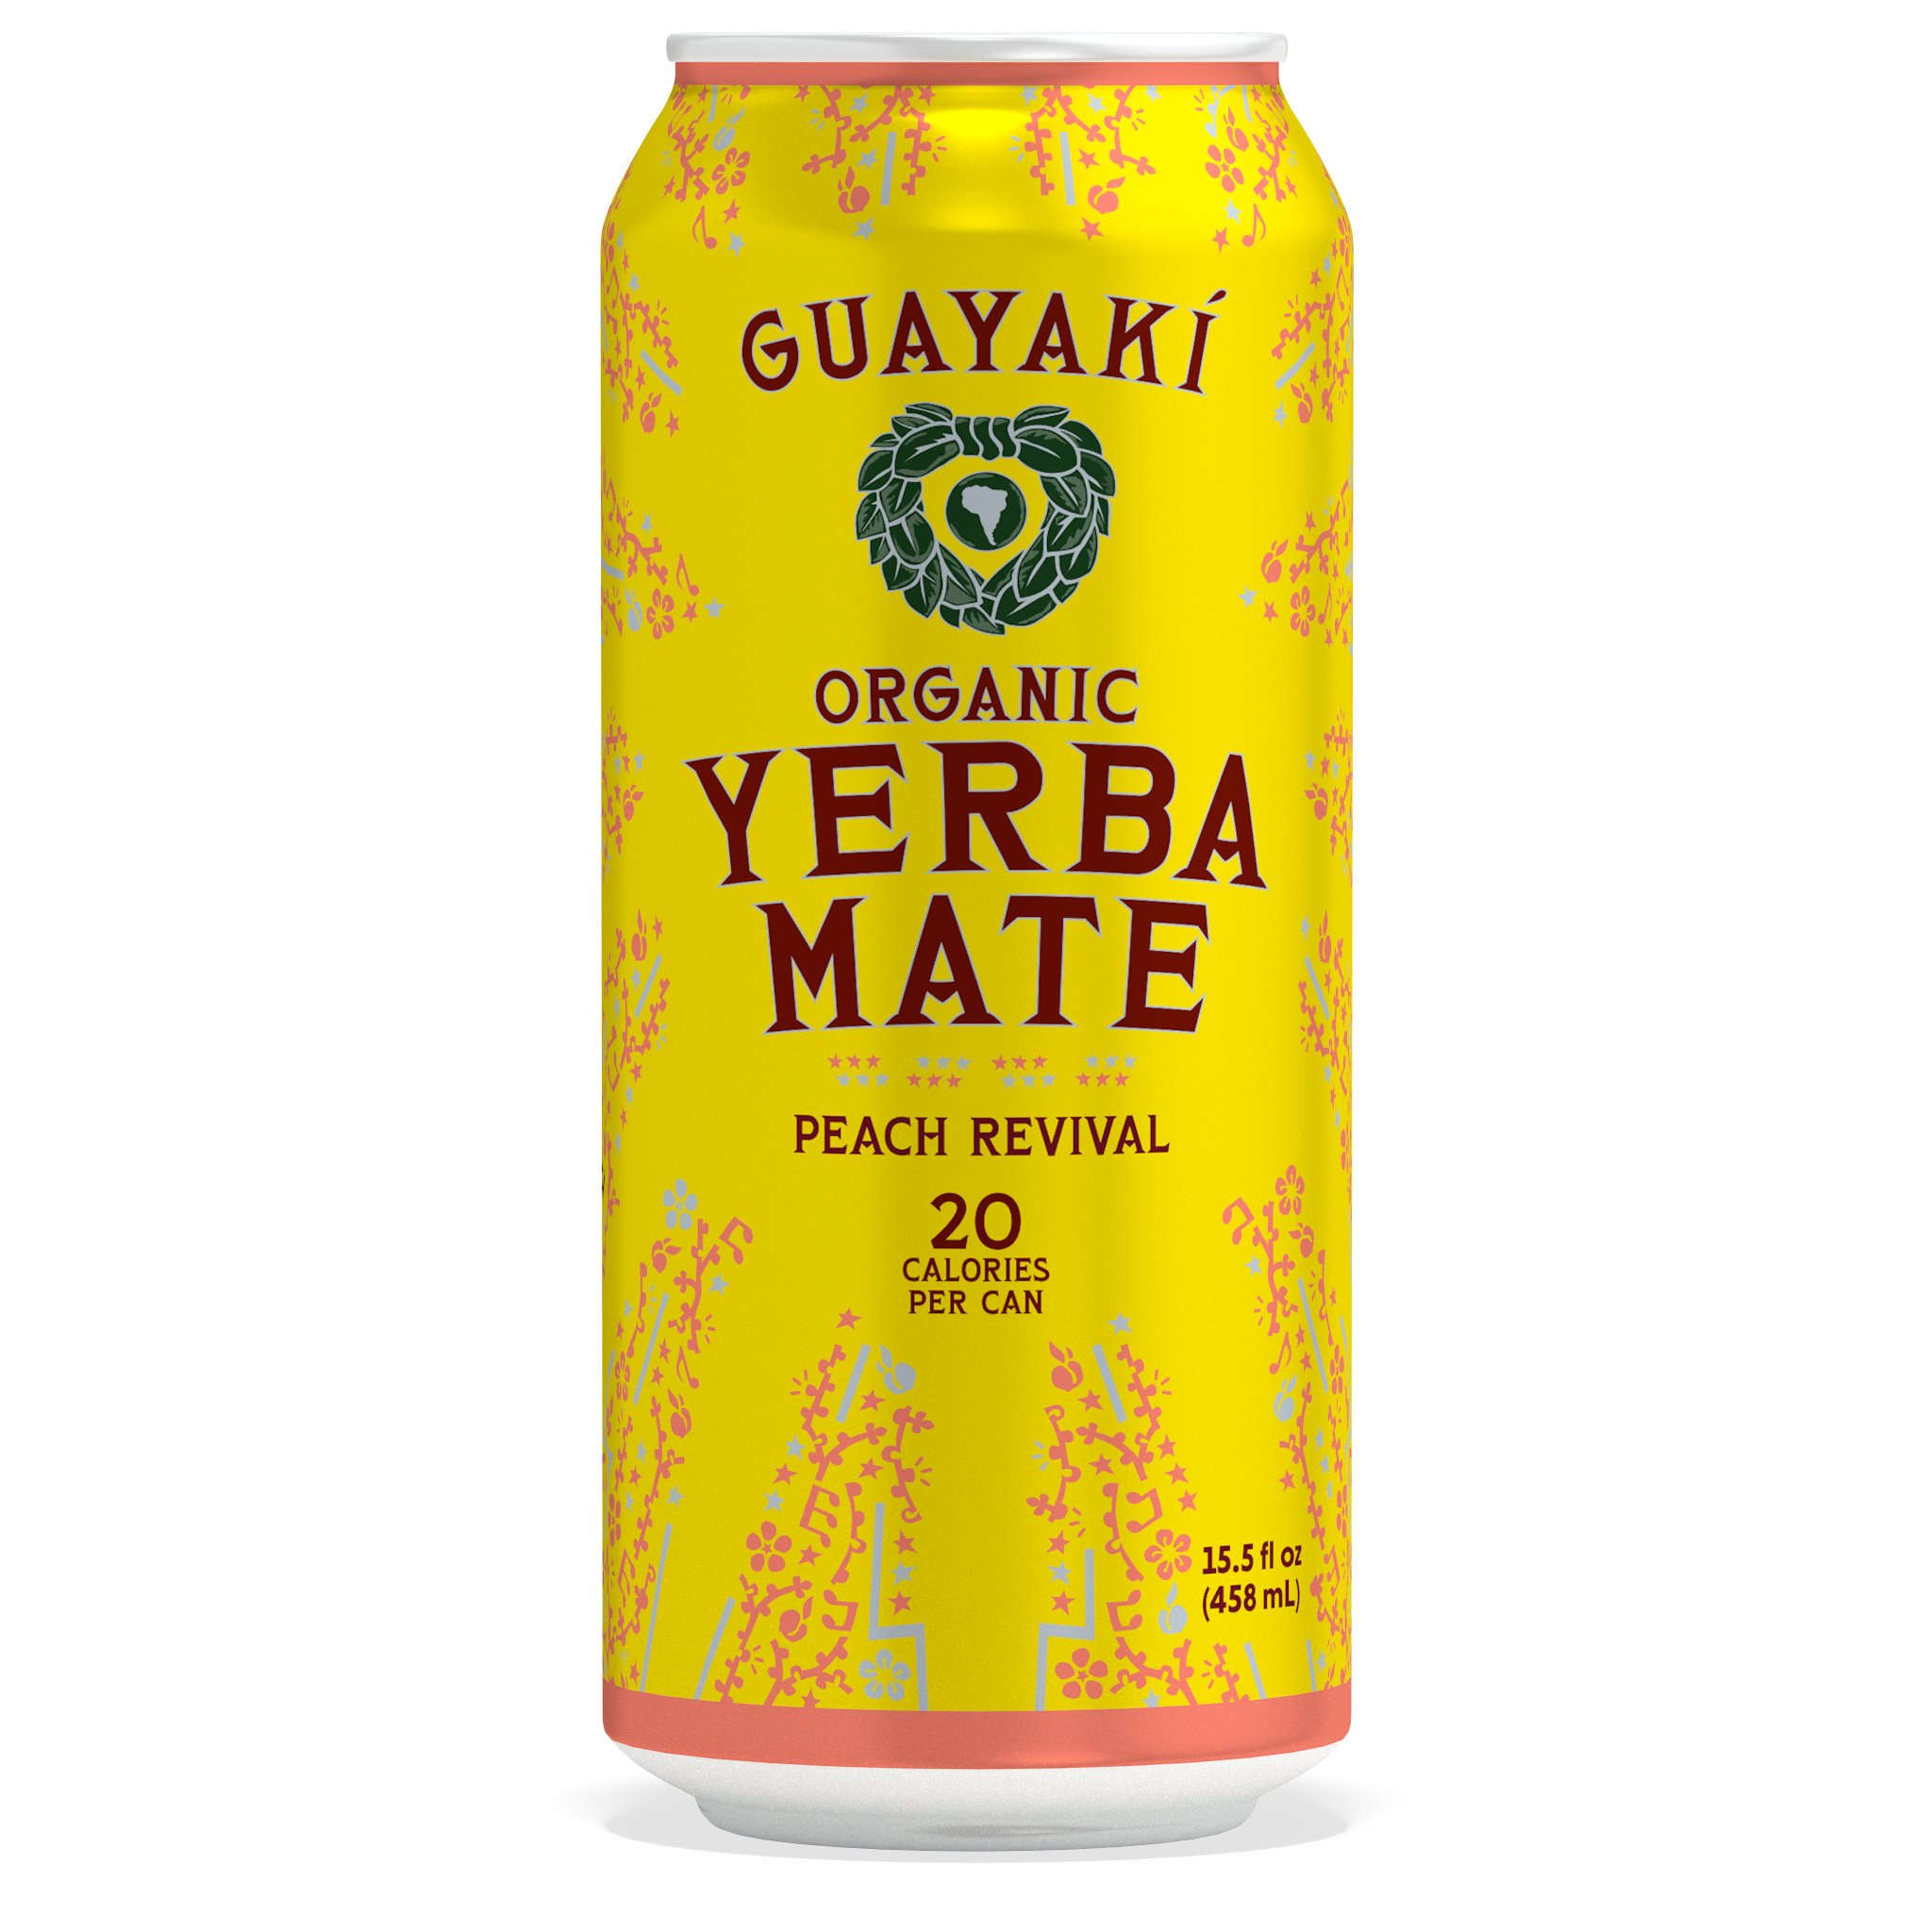 Guayaki Yerba Mate Peach Revival High Energy Drink - Shop Tea at H-E-B